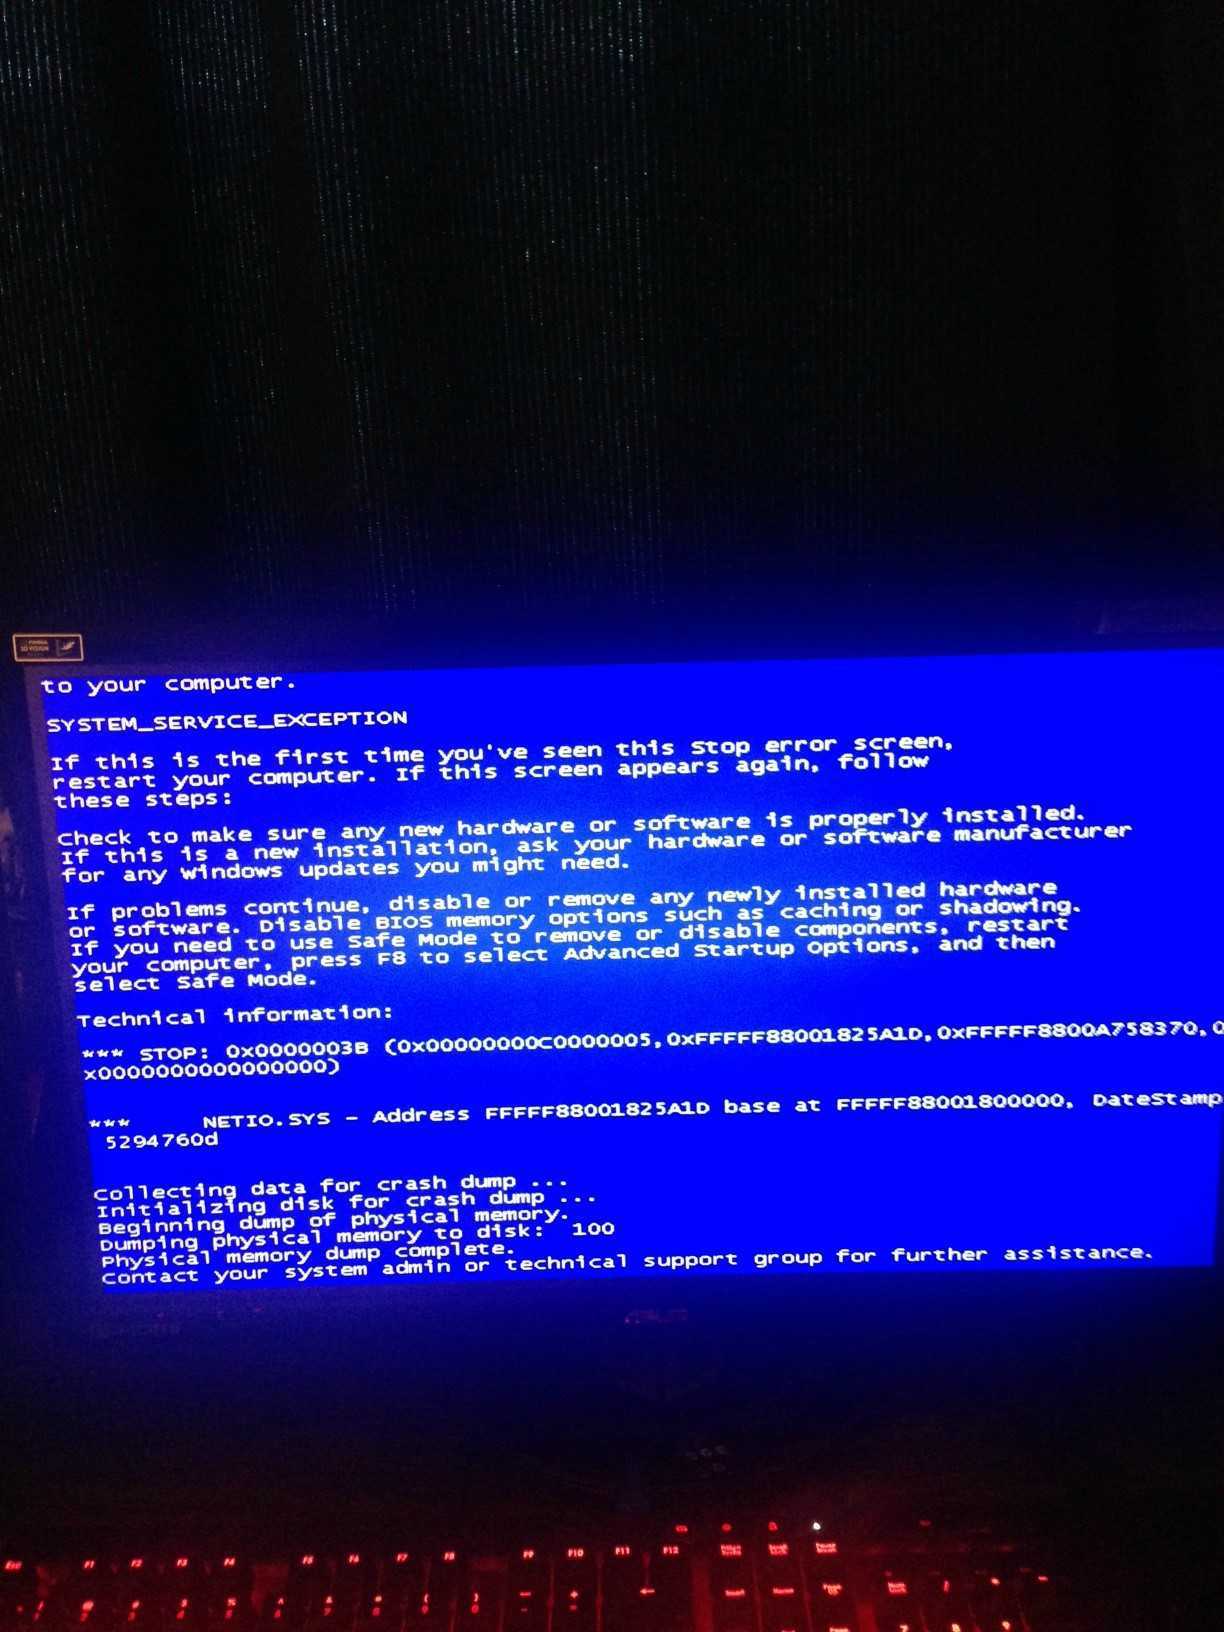 System failed exception. System service exception синий экран Windows 10. Синий экран смерти 0x0000003. Синий экран с цифрами. Экран смерти Windows 8.